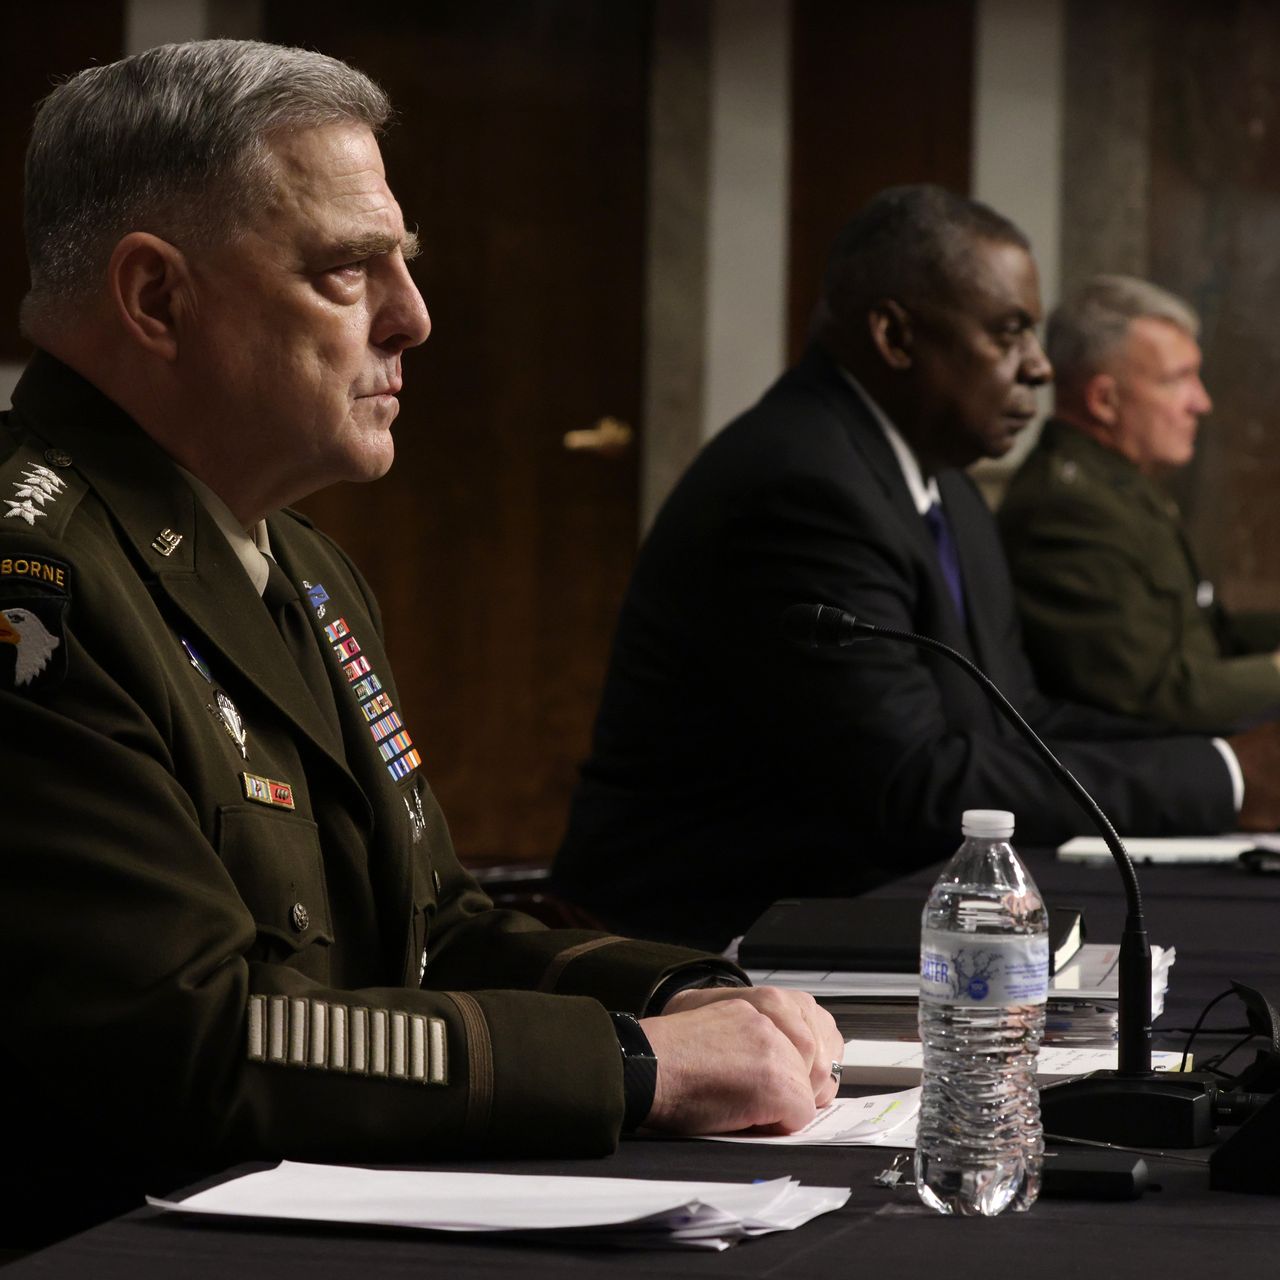 Top US generals contradict Biden on Afghan troop withdrawal